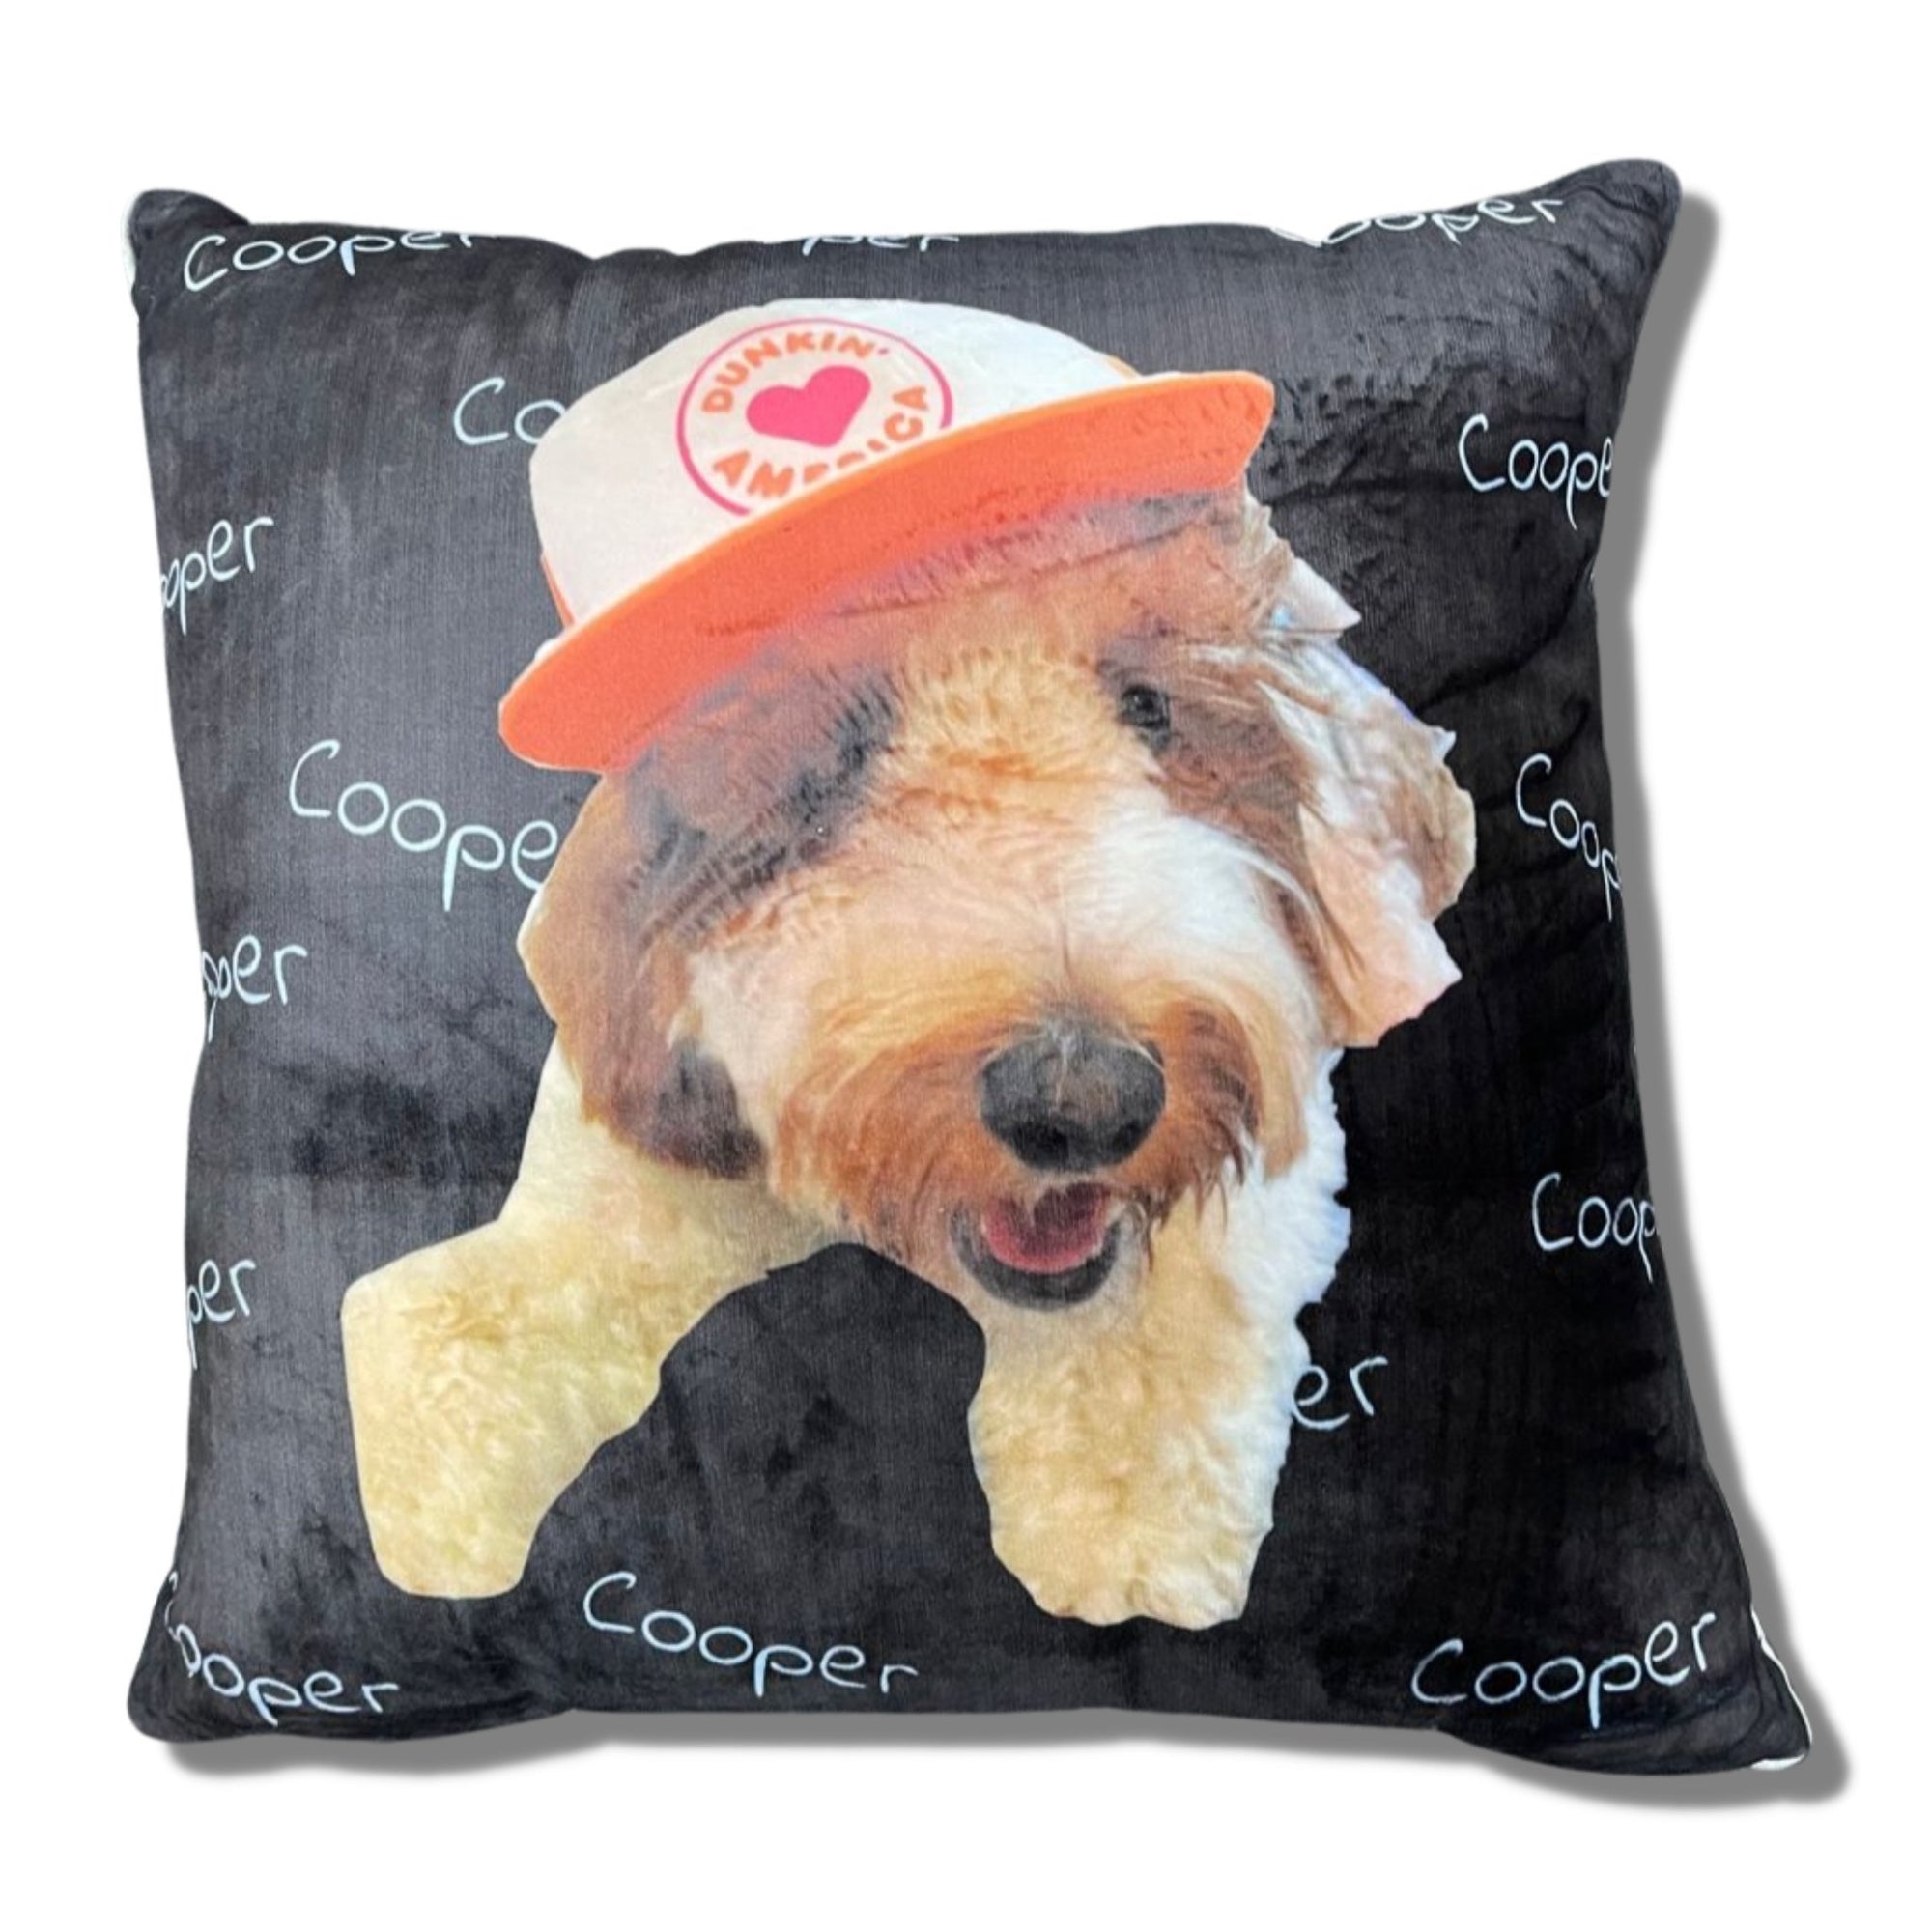 Custom Dog Throw Pillow - a Spirit Animal - Dog Pillow Cases $30-$45 dog Dog Pillow Cases